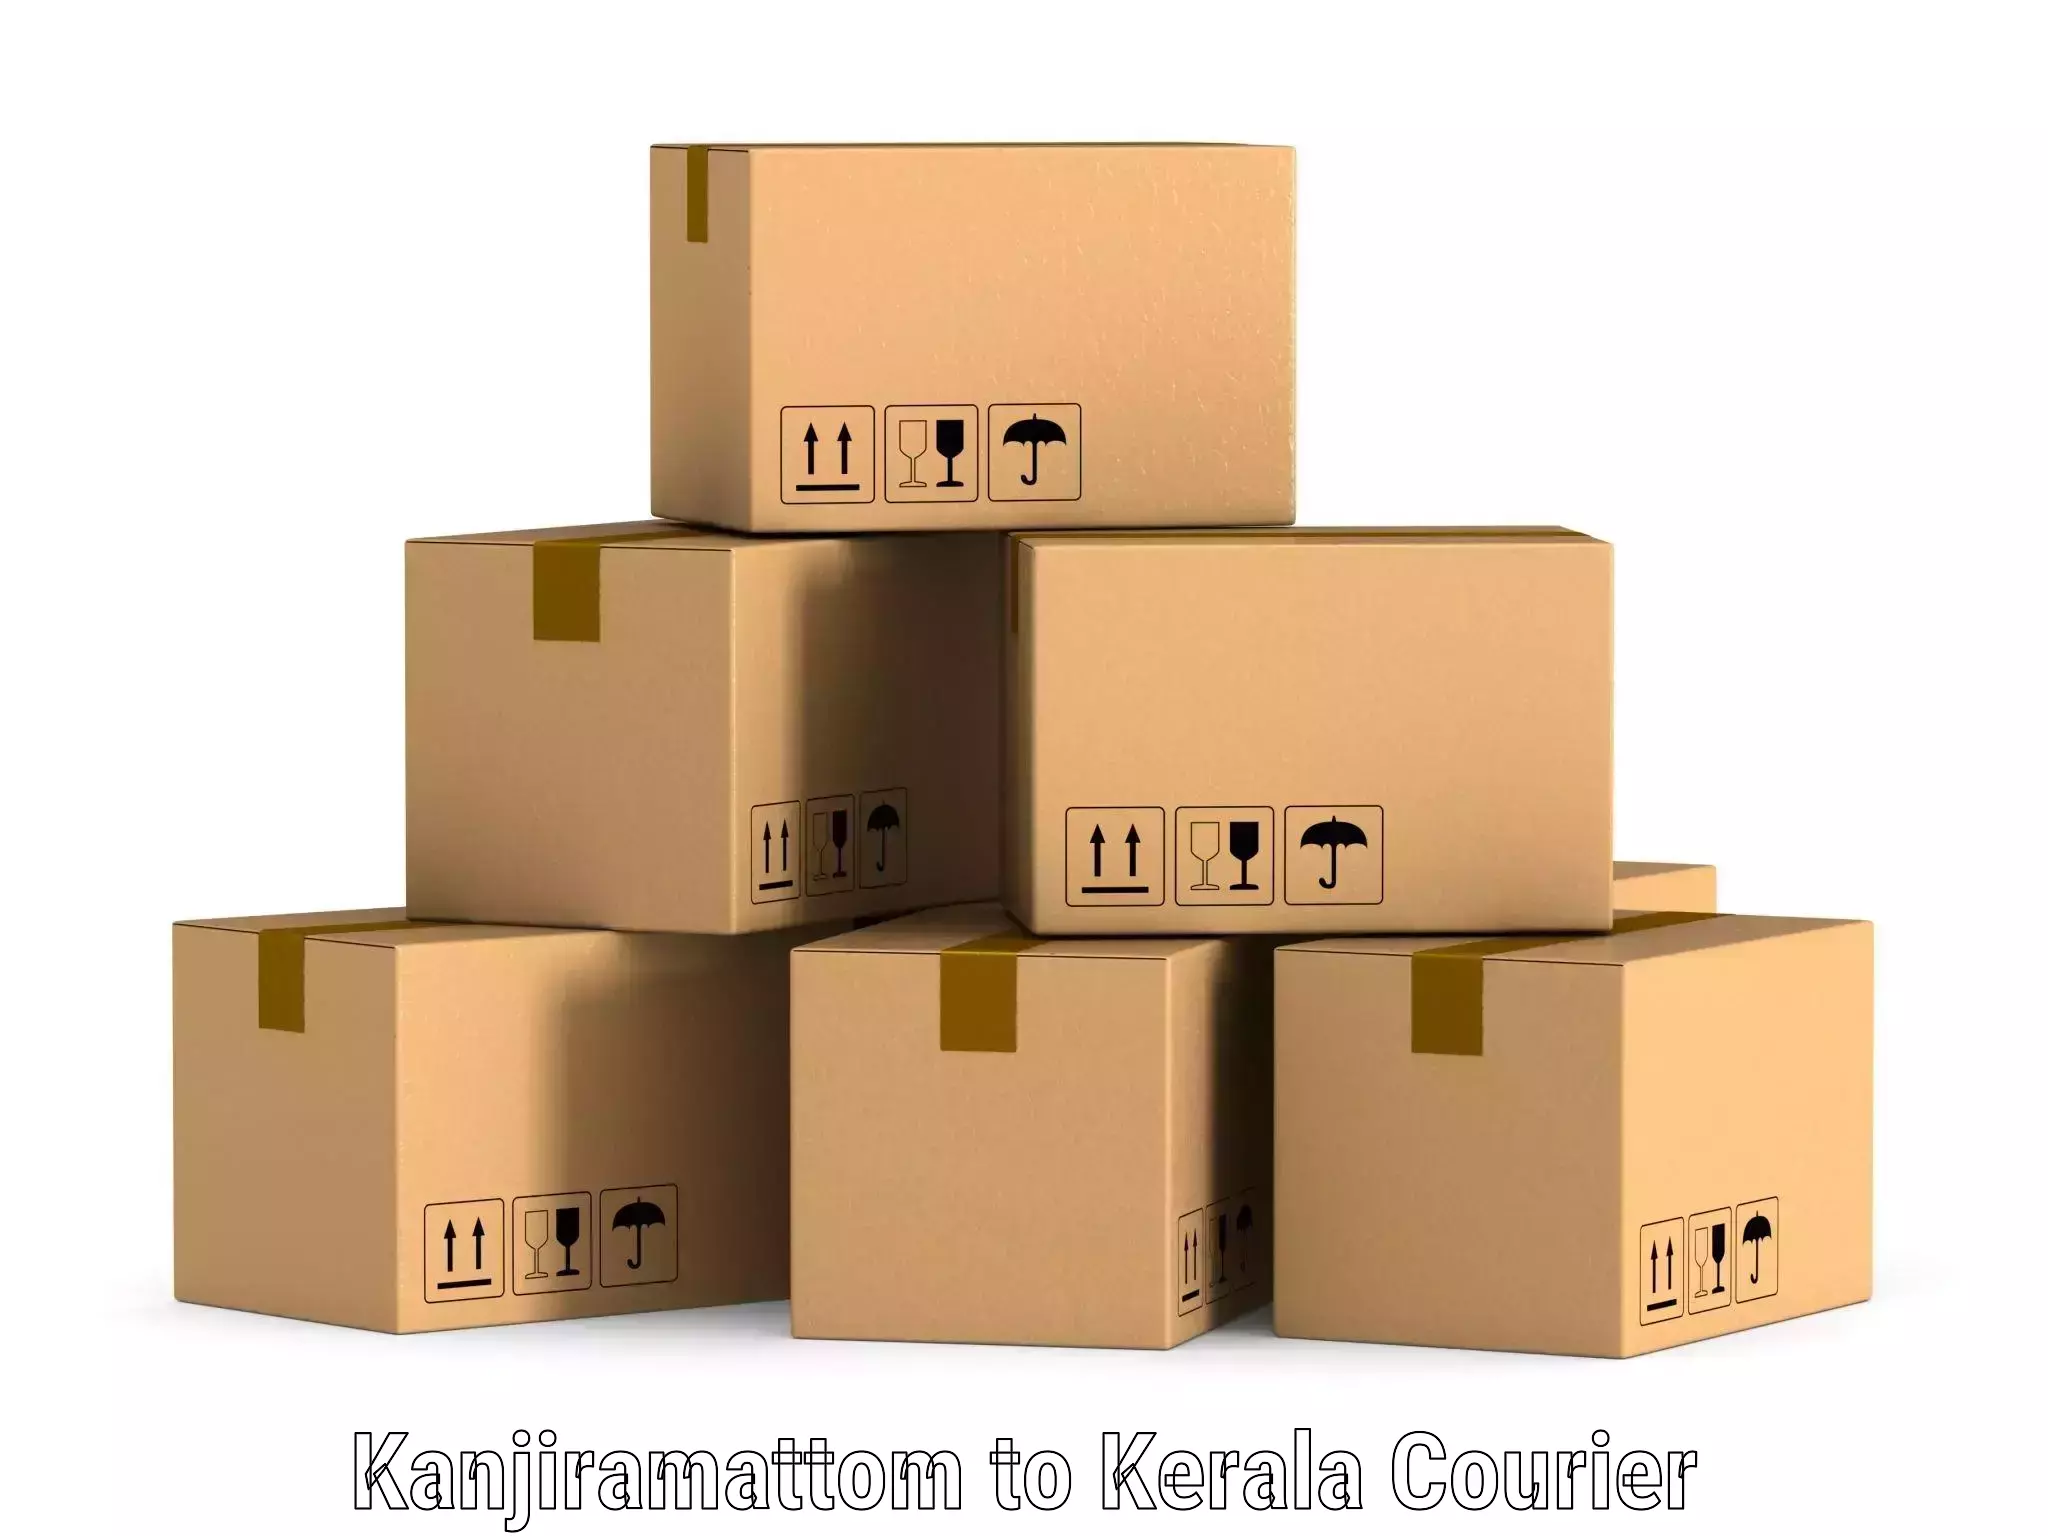 Express delivery capabilities Kanjiramattom to Kalpetta